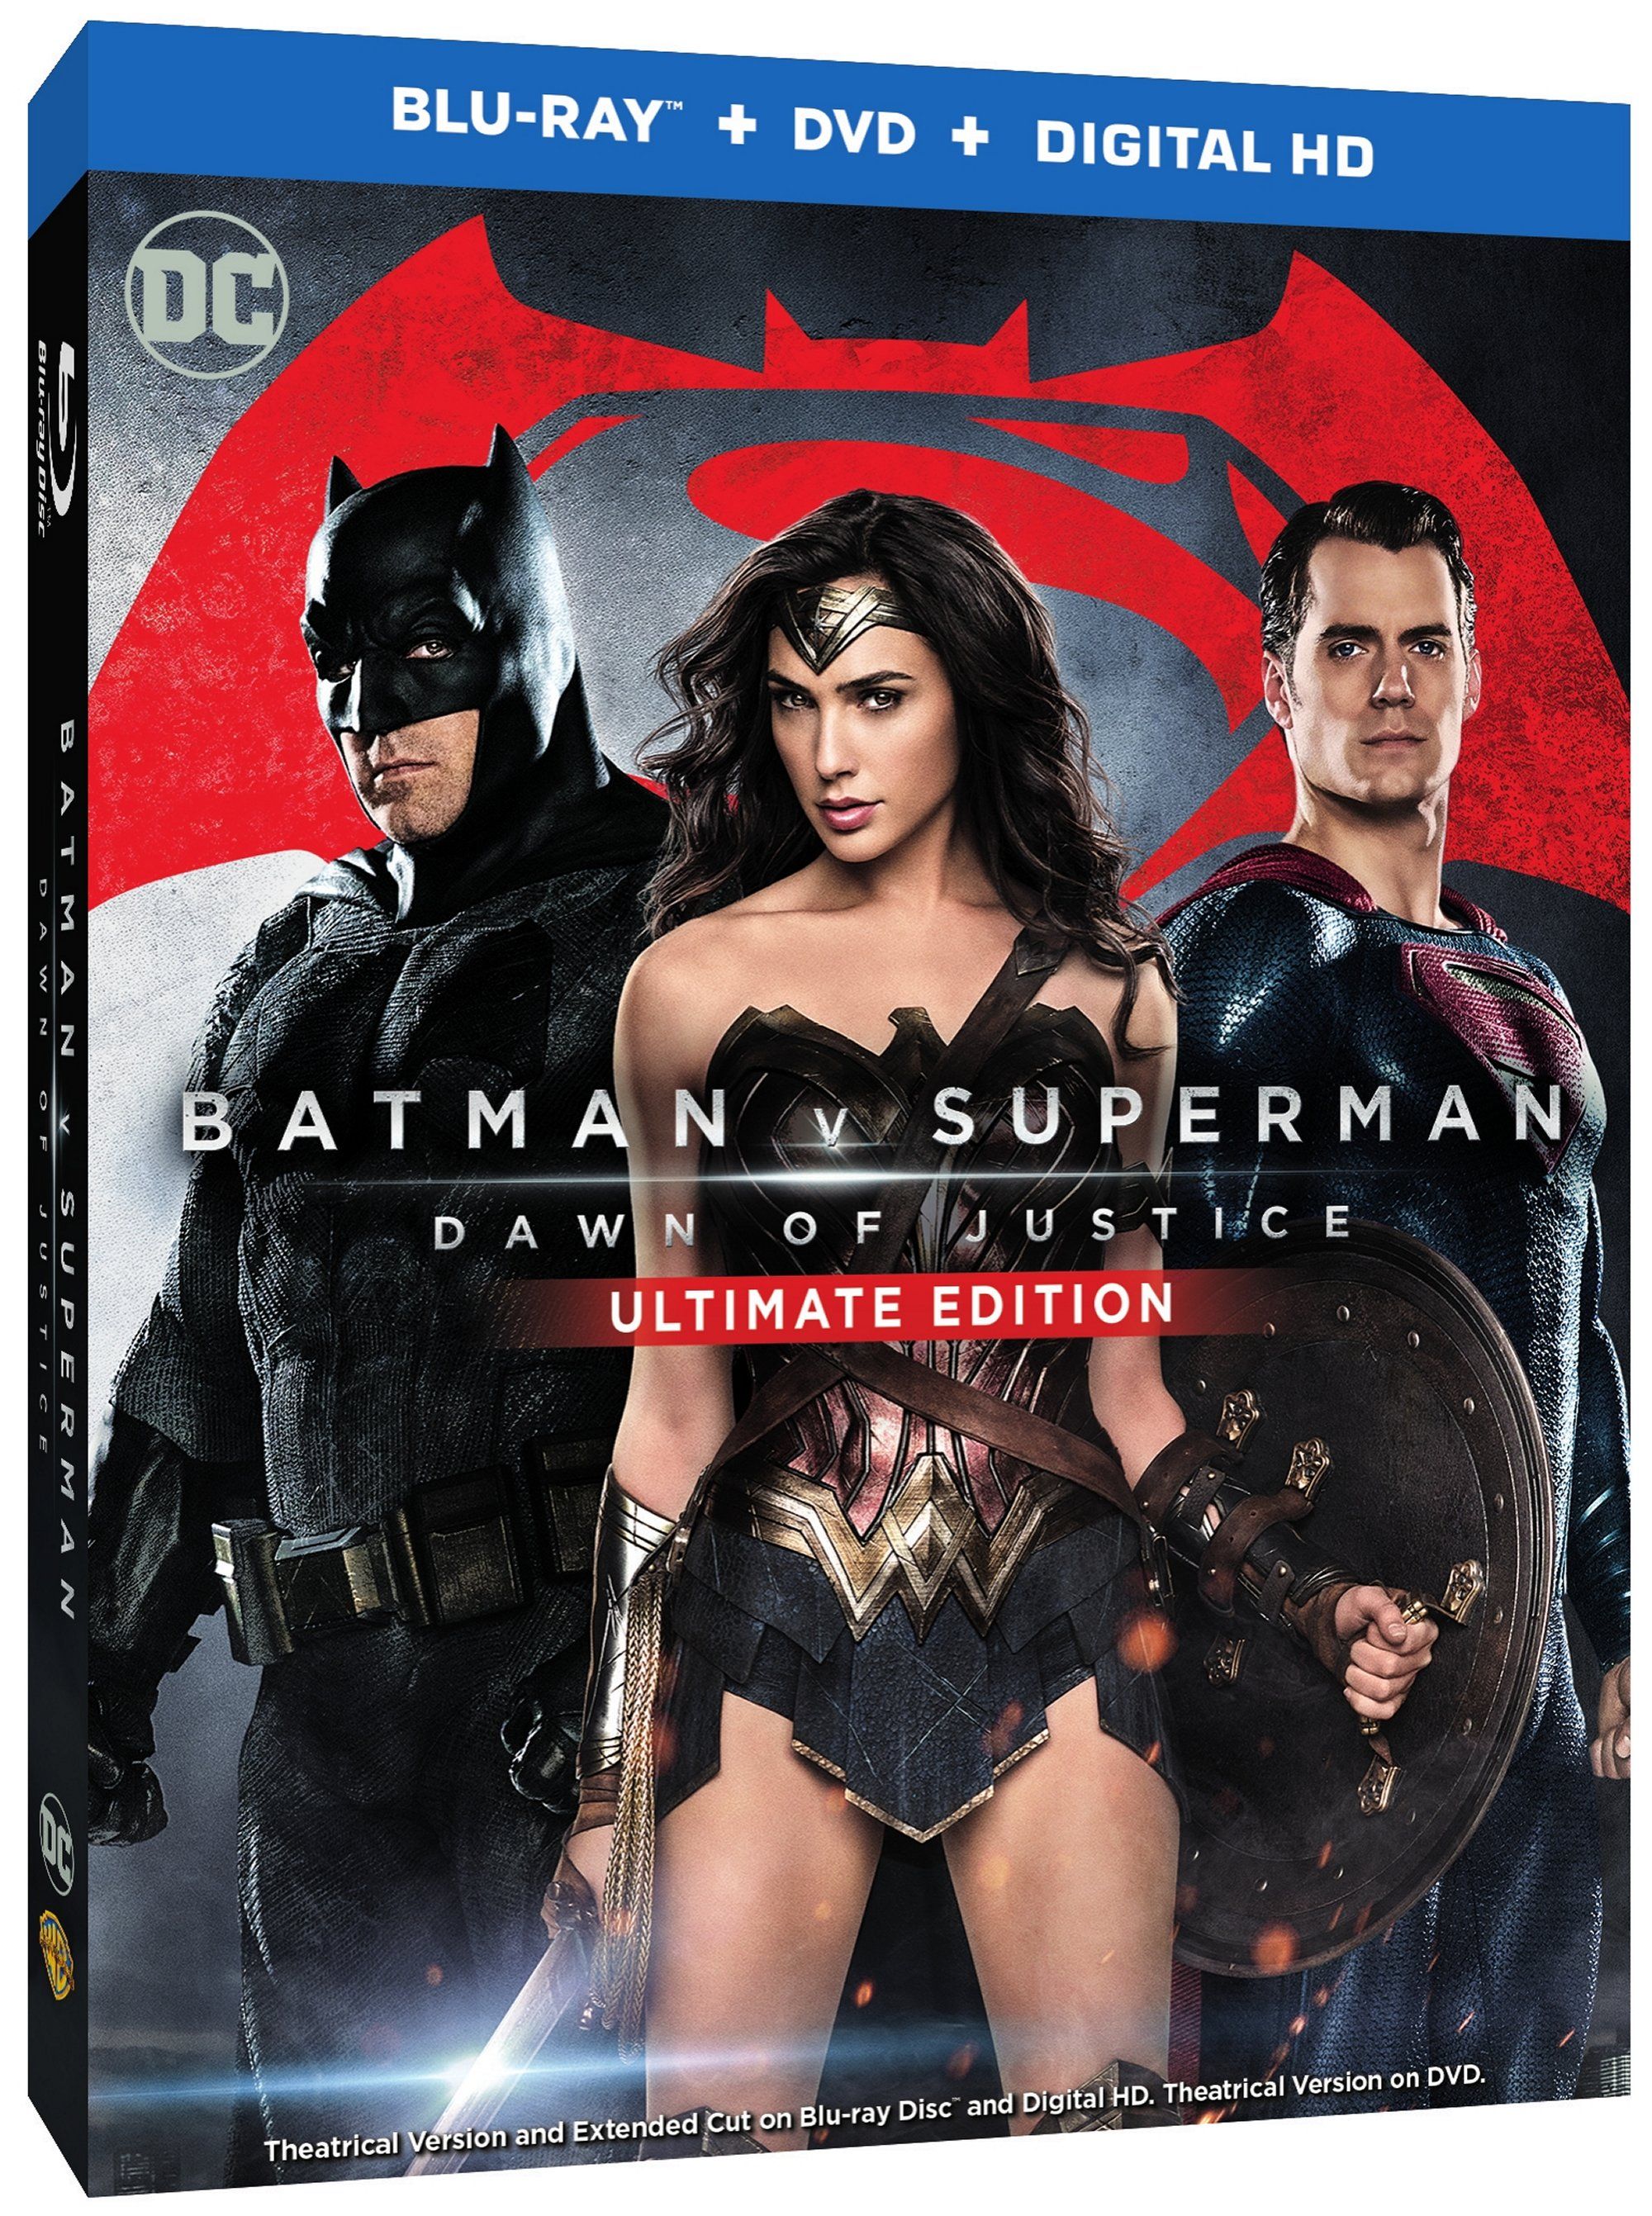 Batman v Superman Ultimate Edition Trailer, Blu-ray Details | Collider